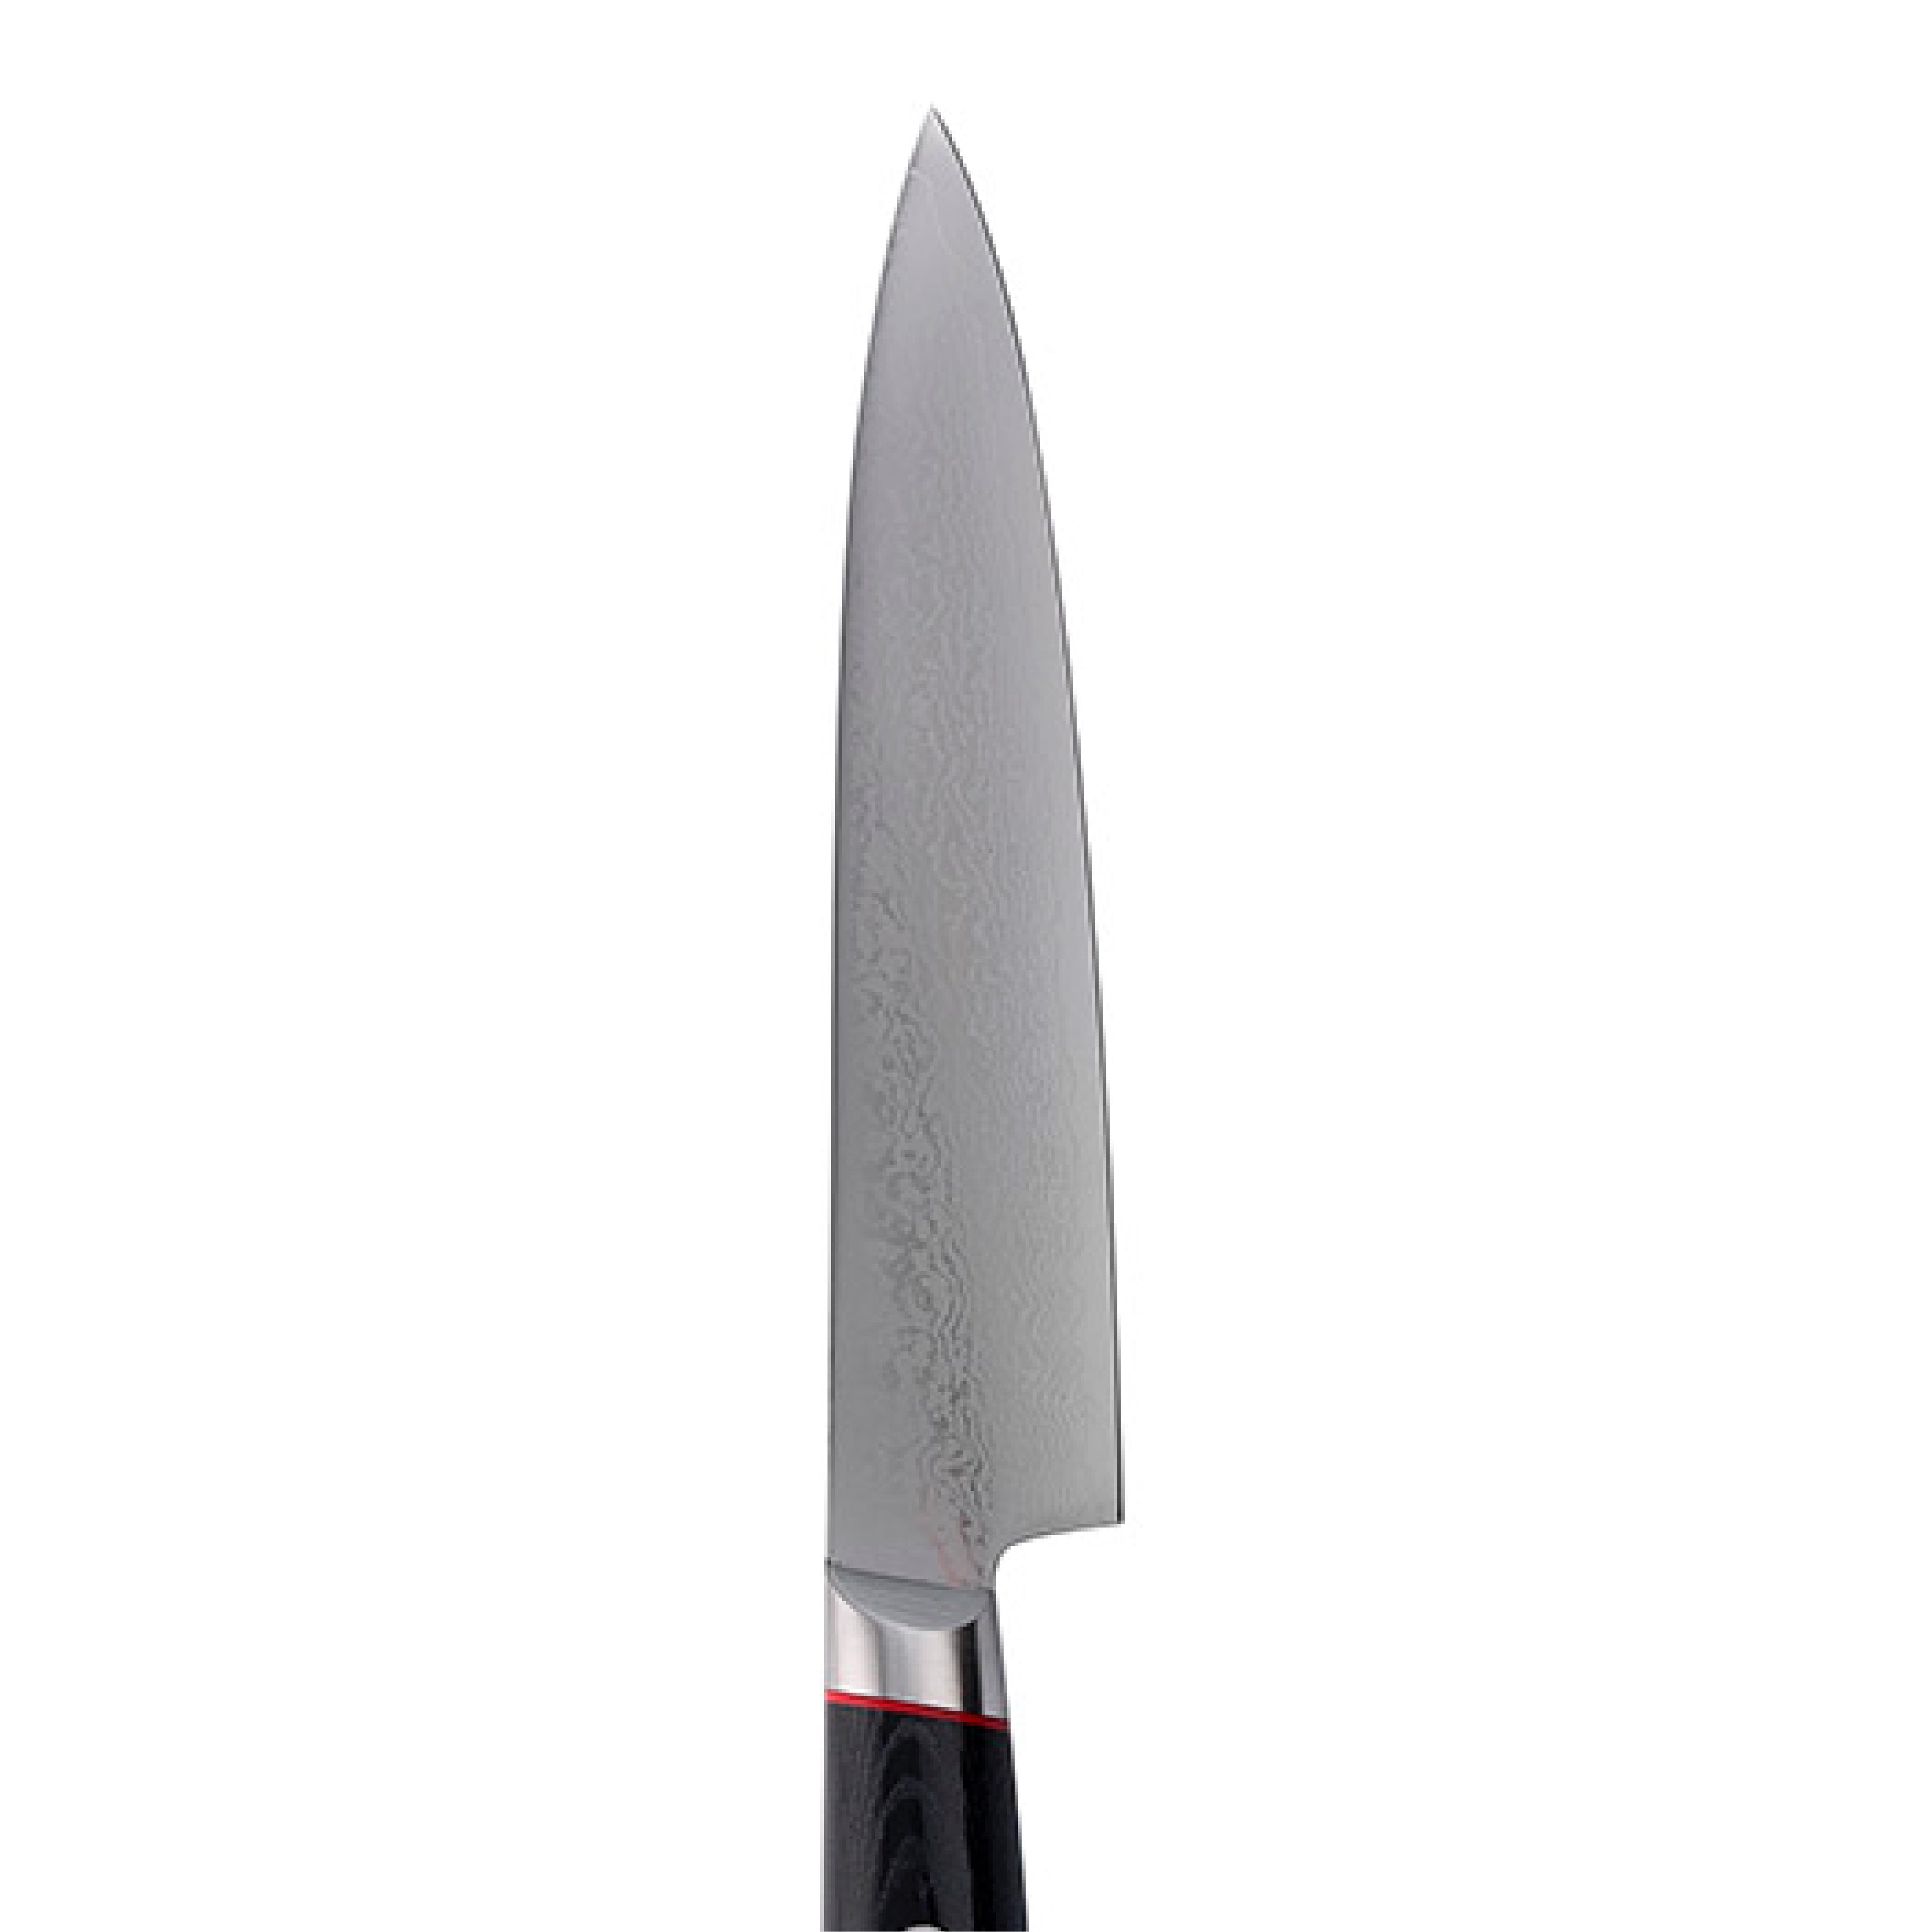 SEKIKANETSUGU Saiun VG10 Utility knife / 120mm - 150mm